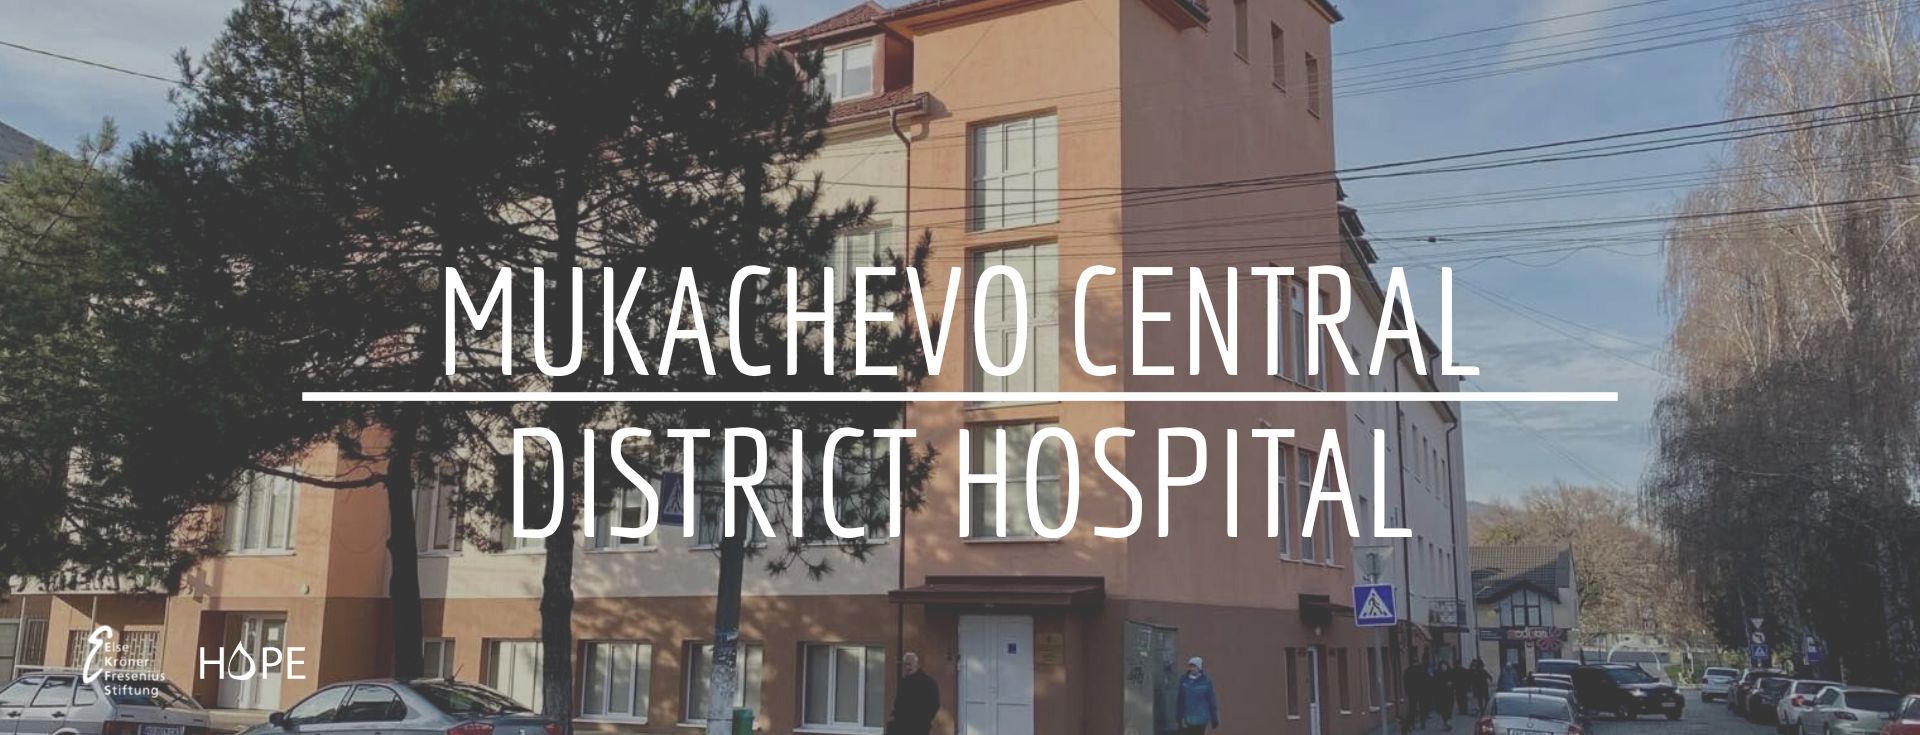 Mukachevo Centrtal District Hospital